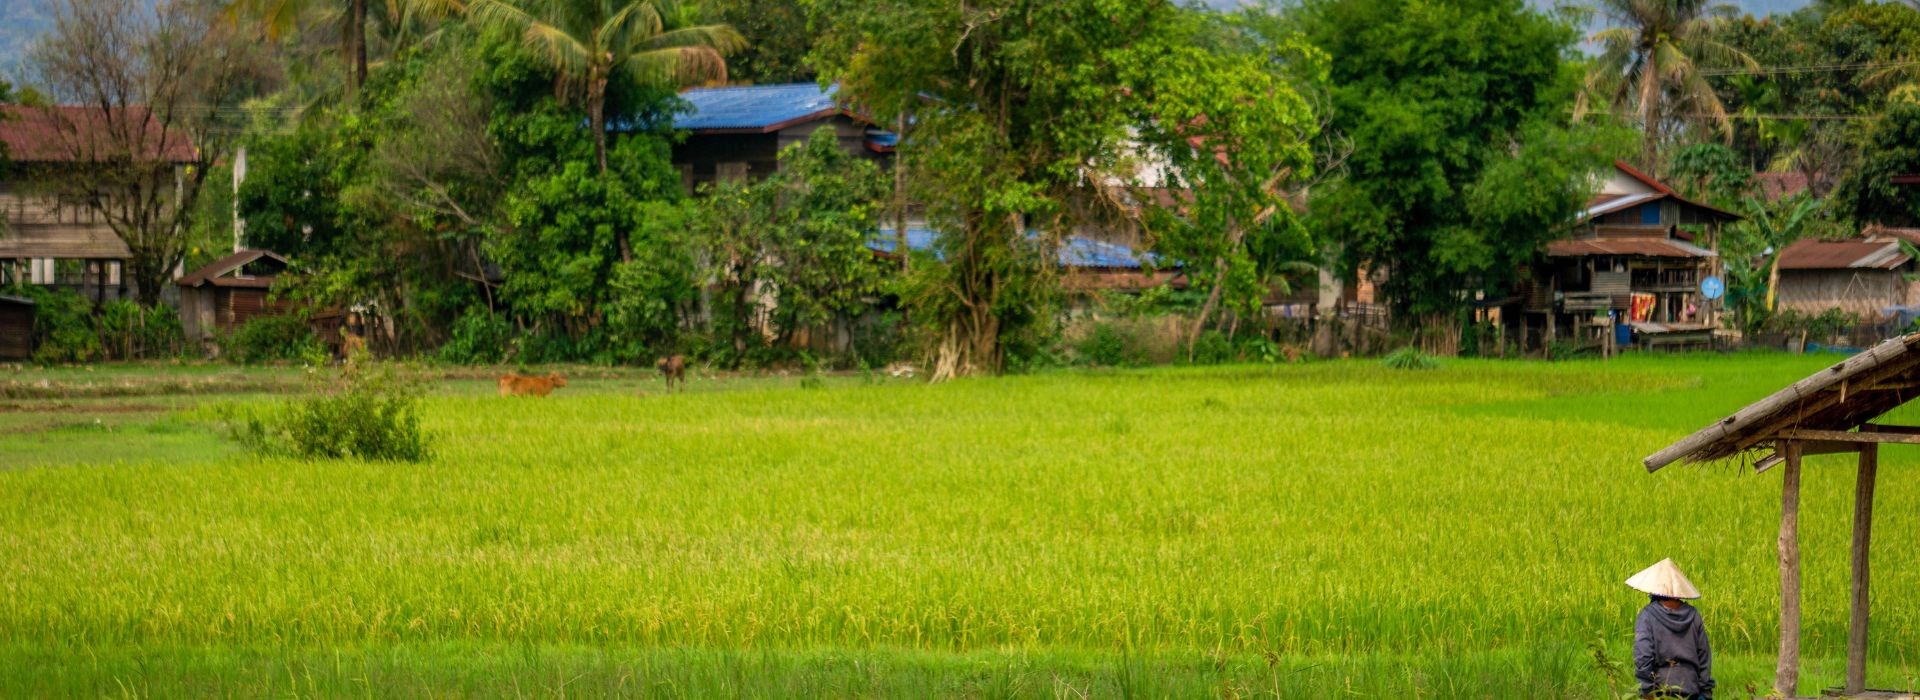 Visiter Oudomxay - Laos